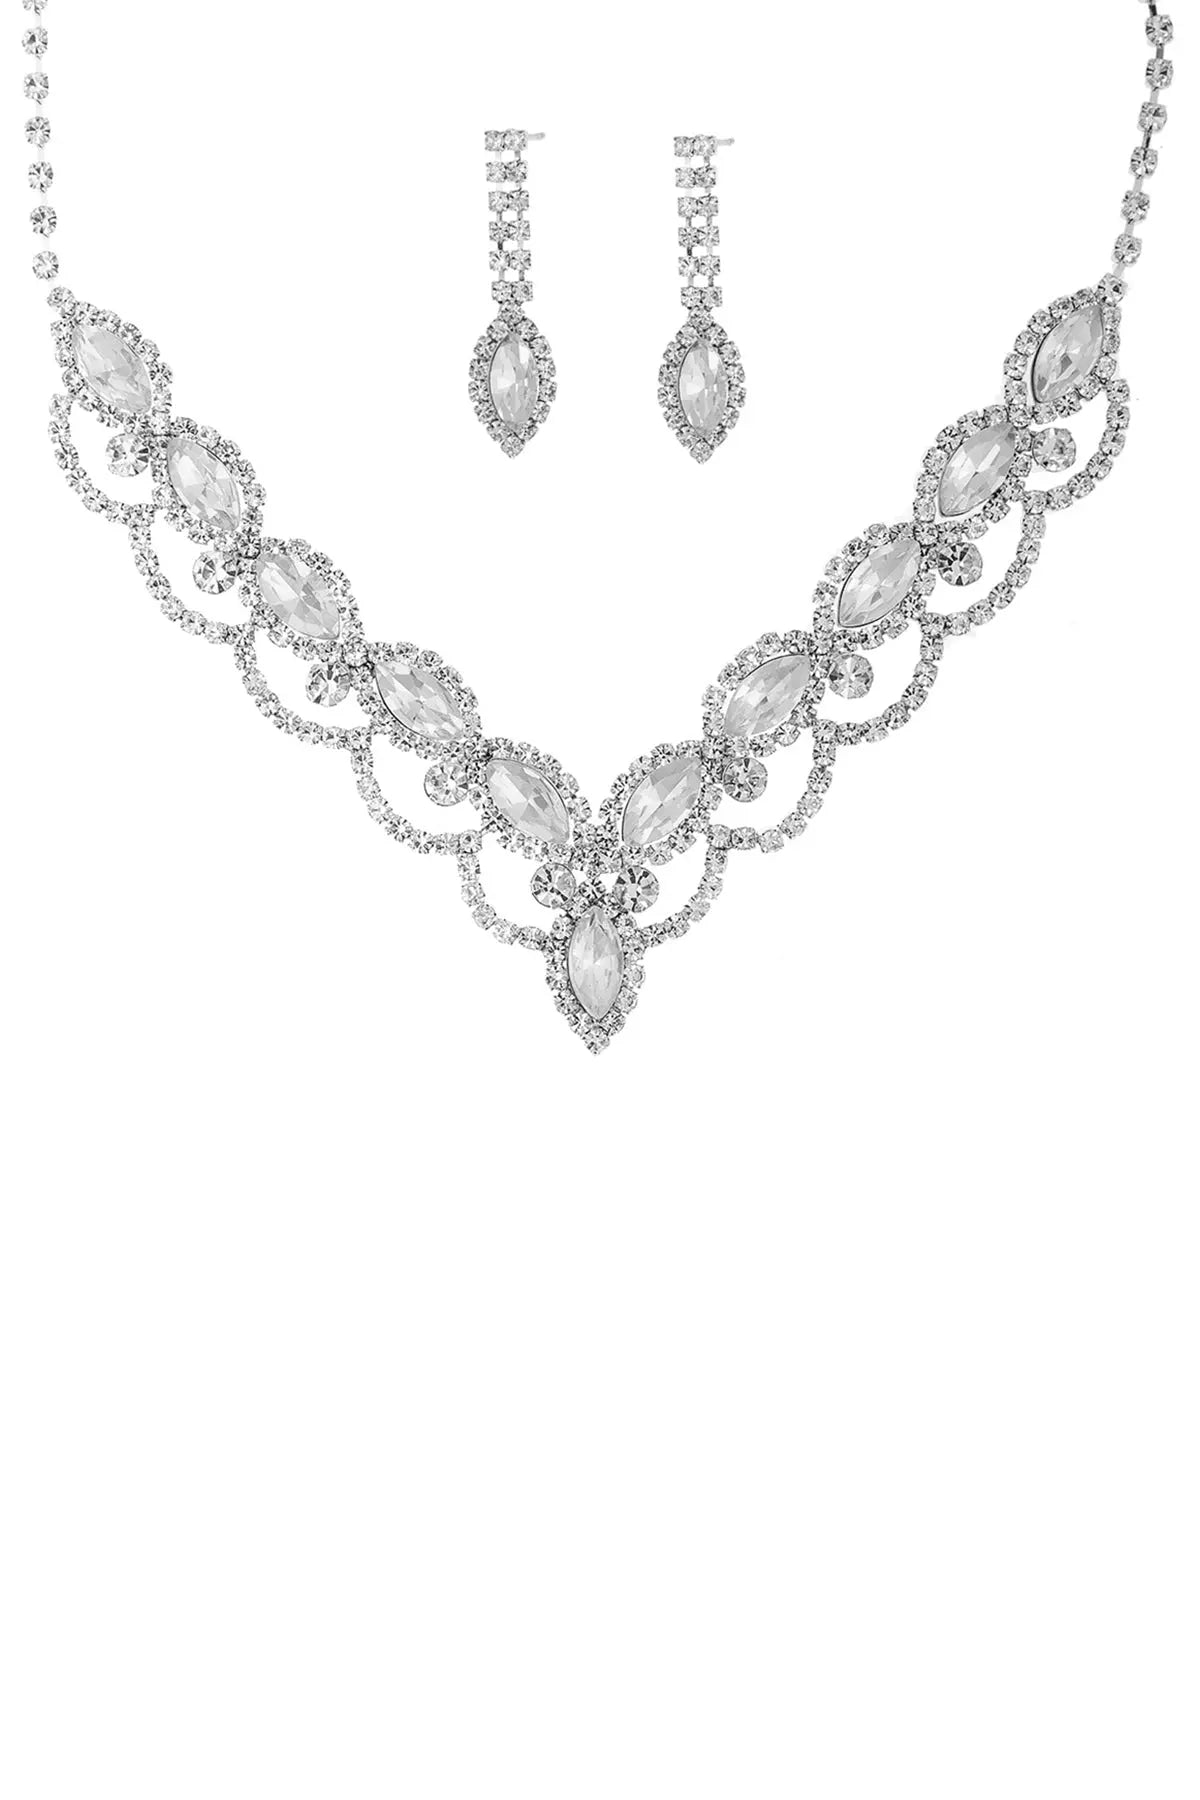 Rhinestone Teardrop V Shape Necklace And Earring Set Sunny EvE Fashion